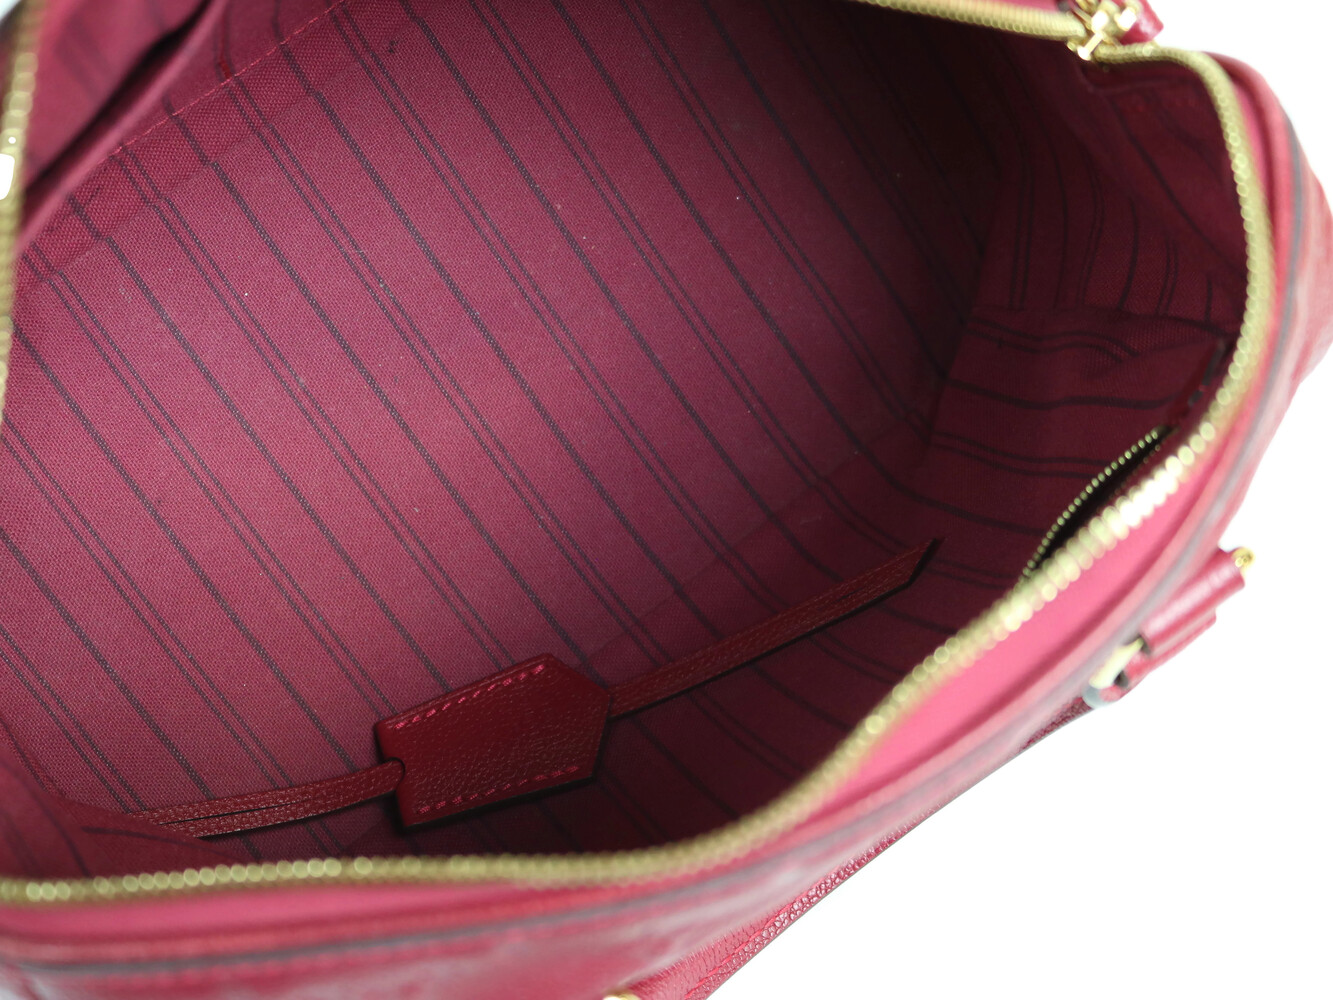 Louis Vuitton Speedy Bandouliere Handbag Monogram Luxury Leather Hand Bag Red 